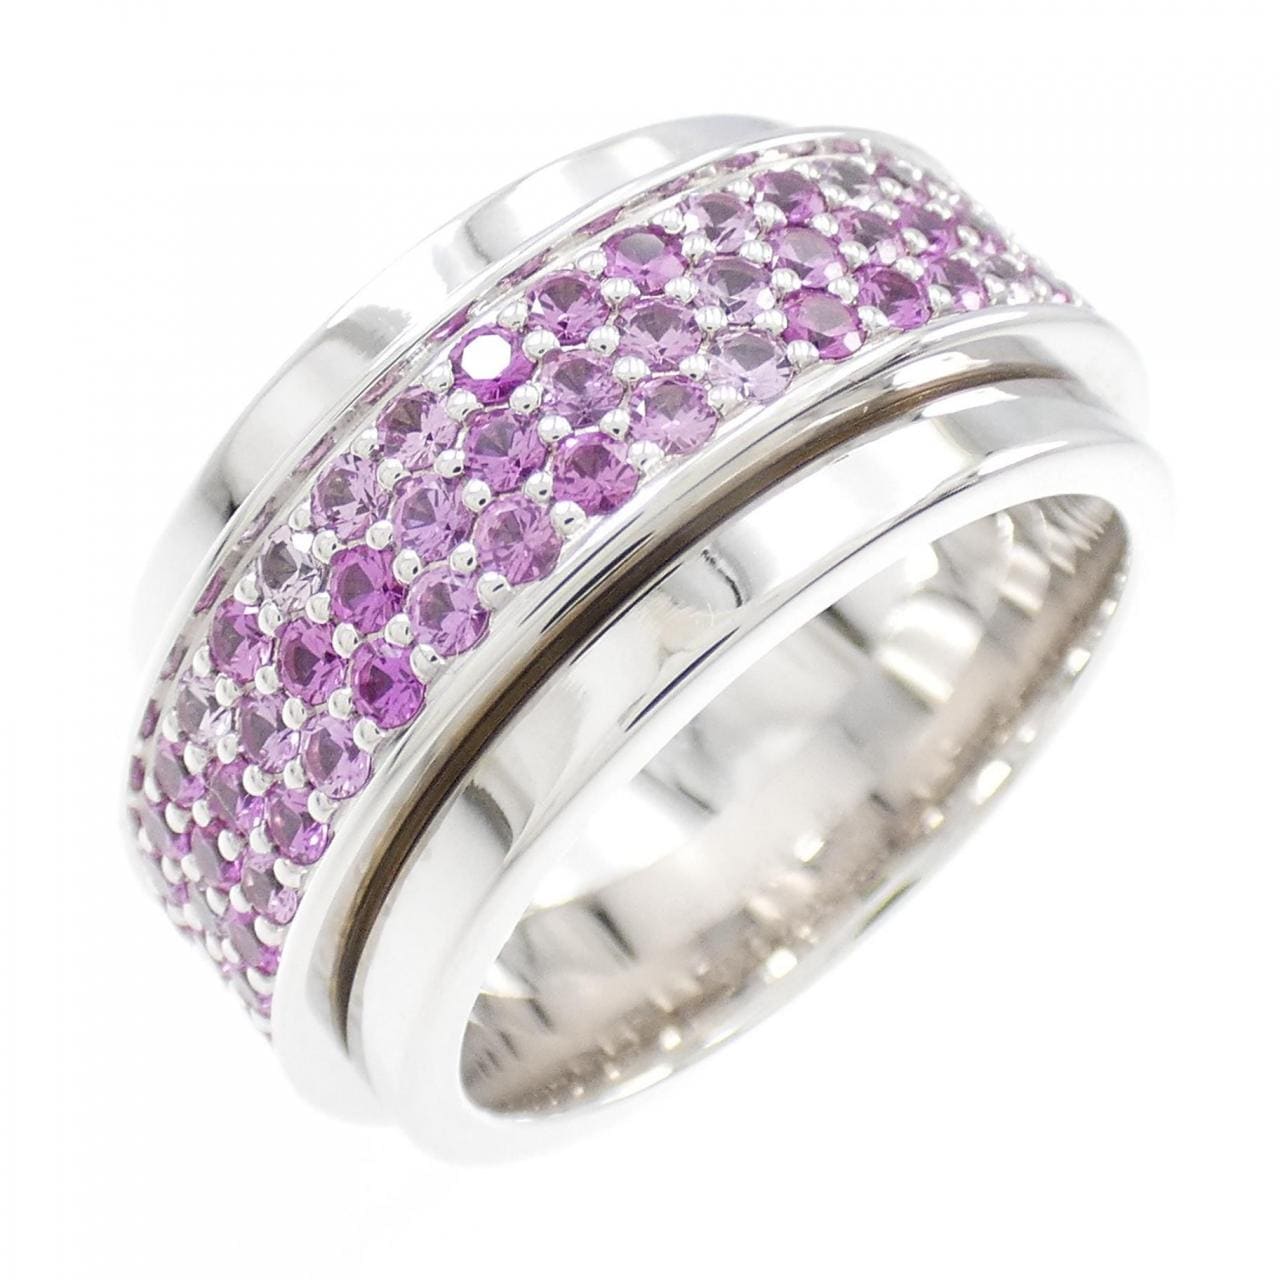 Piaget sapphire ring